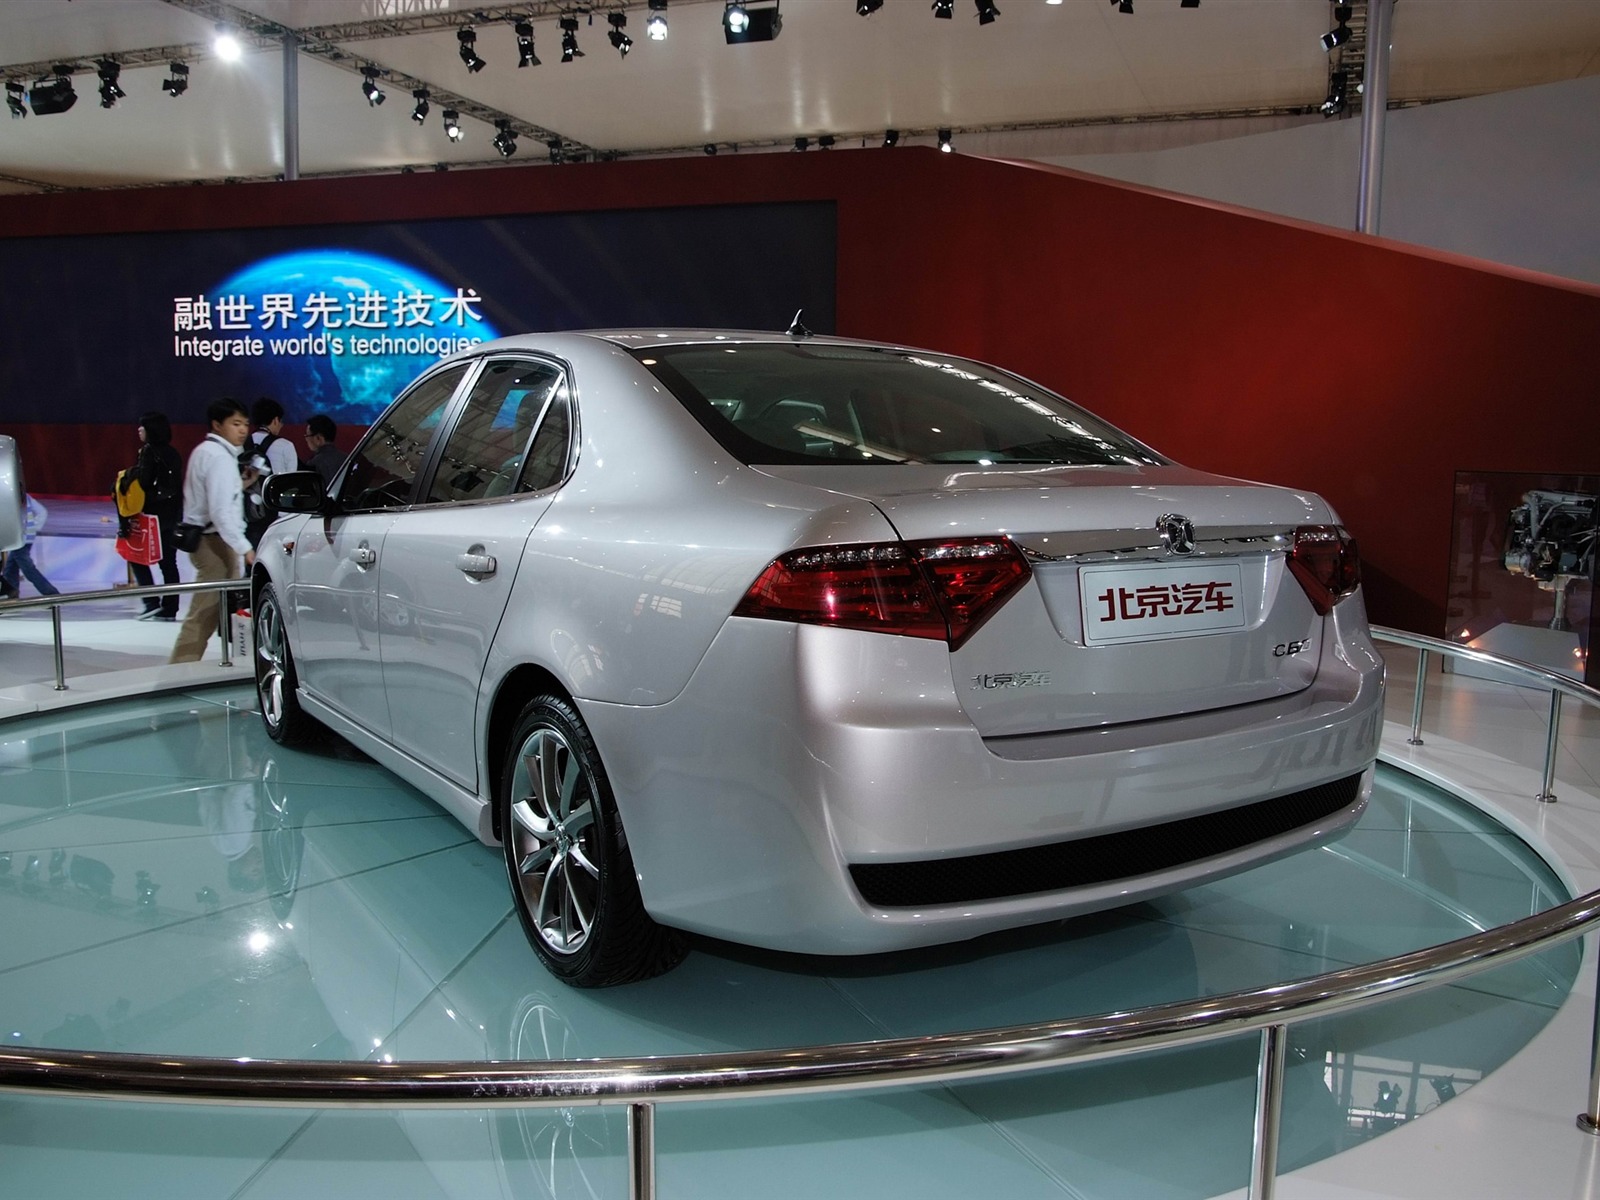 2010 Salón Internacional del Automóvil de Beijing Heung Che (obras barras de refuerzo) #10 - 1600x1200